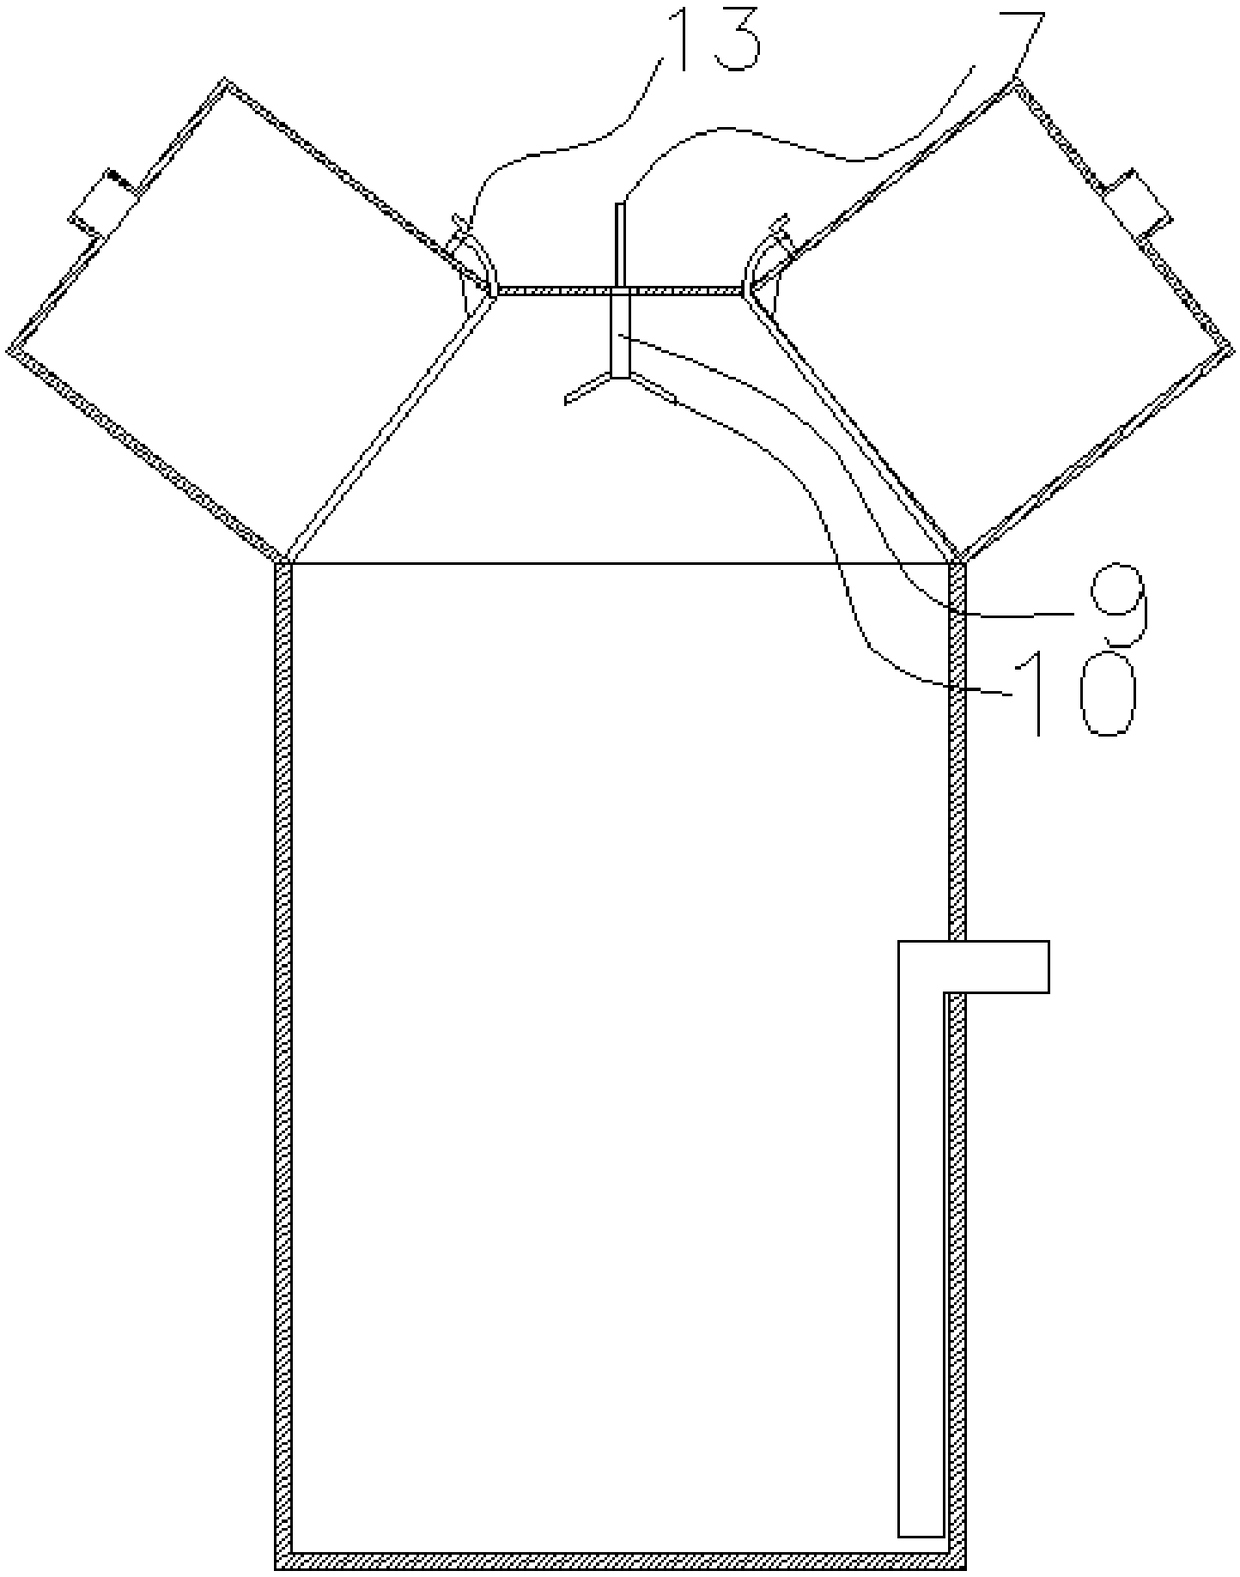 Double-side single-layer sewage treatment apparatus